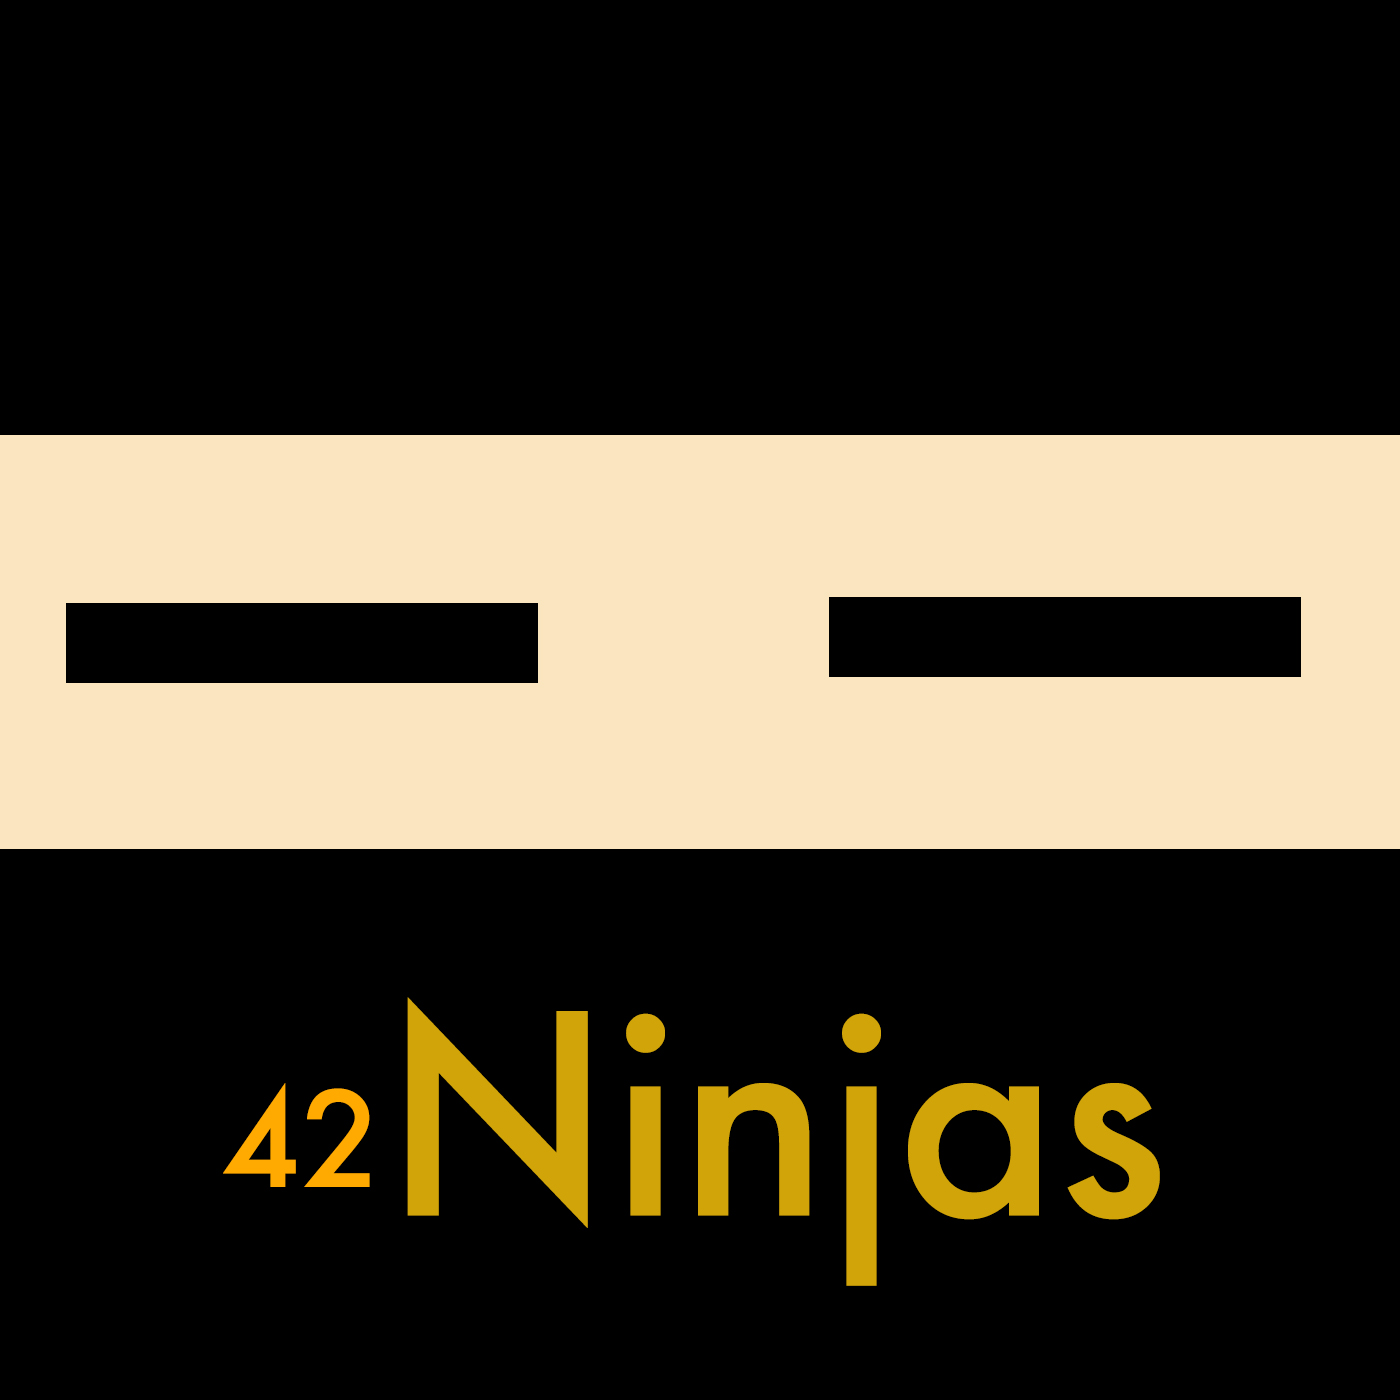 42 Ninjas